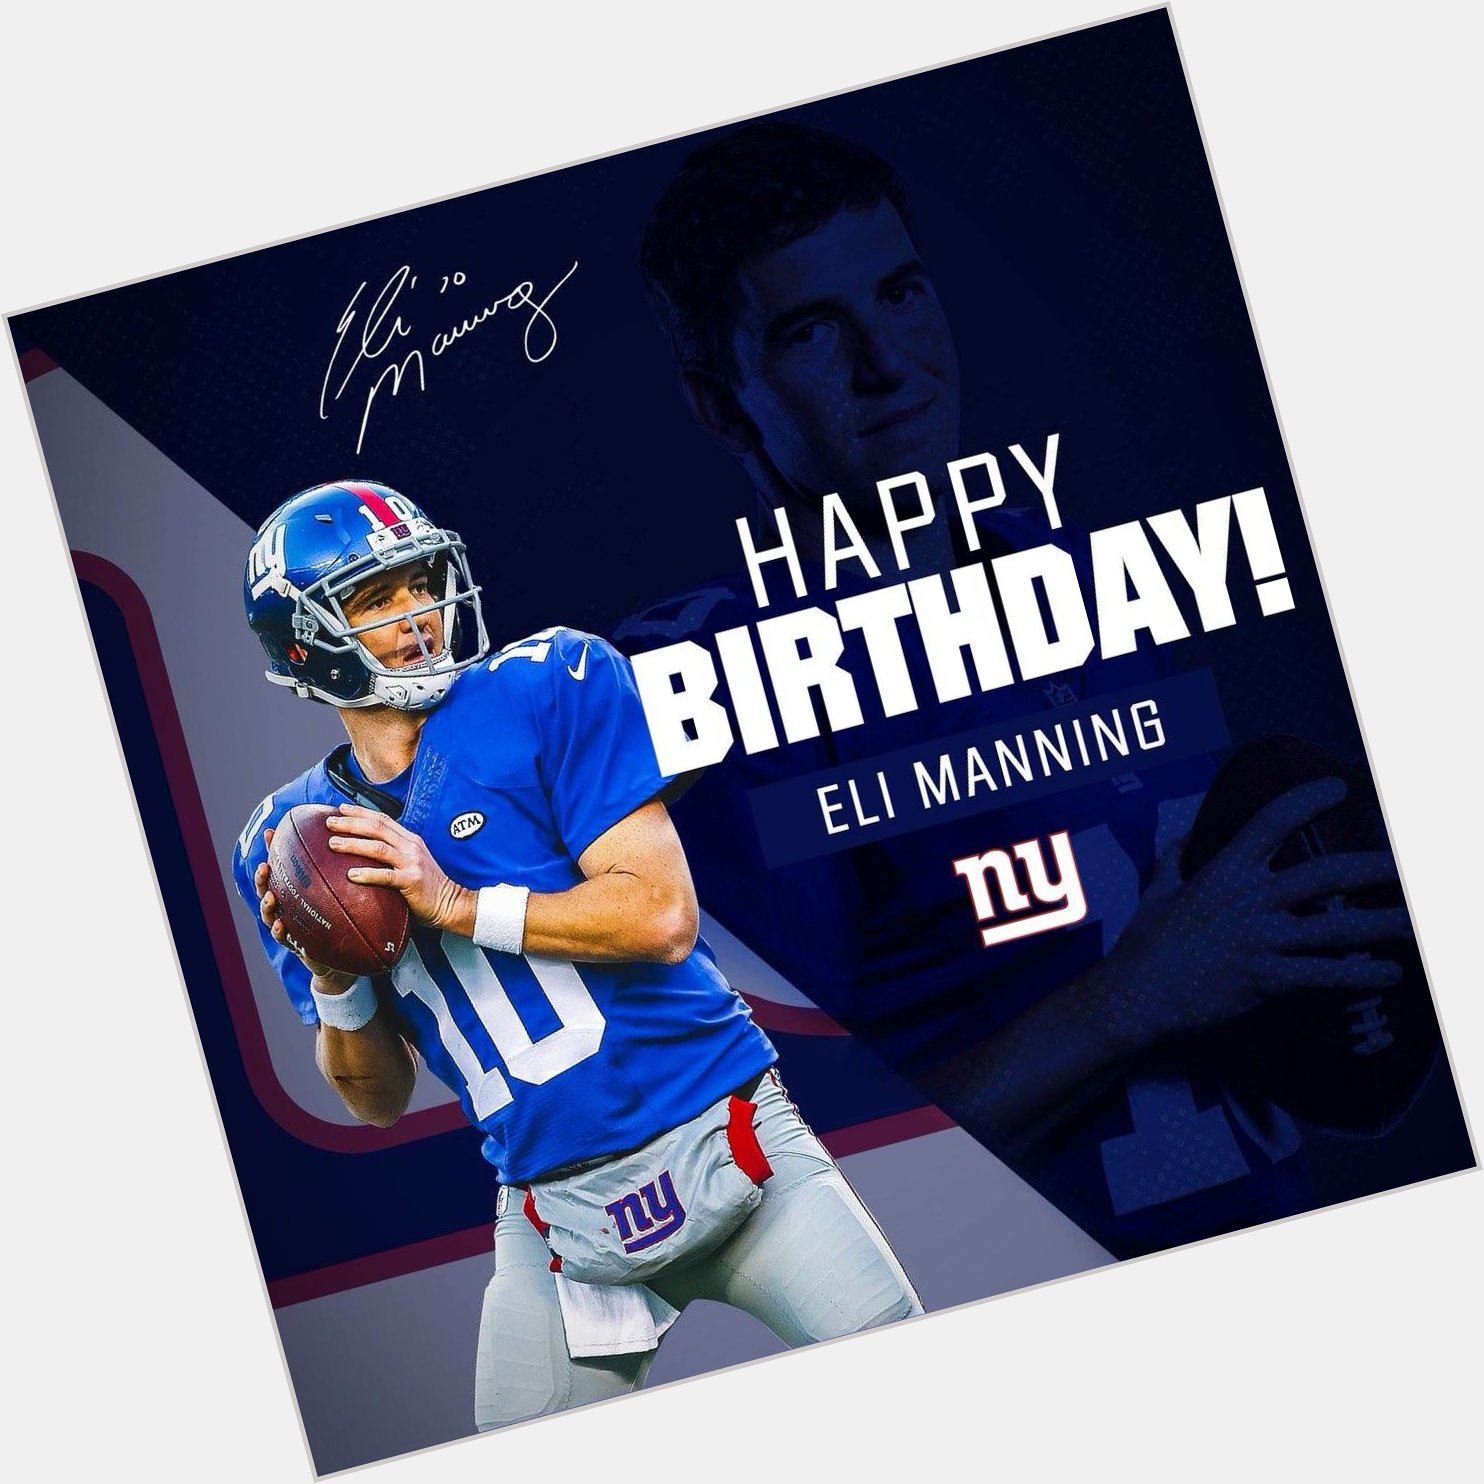 Happy Birthday to 2x Super Bowl Champion, Eli Manning! 